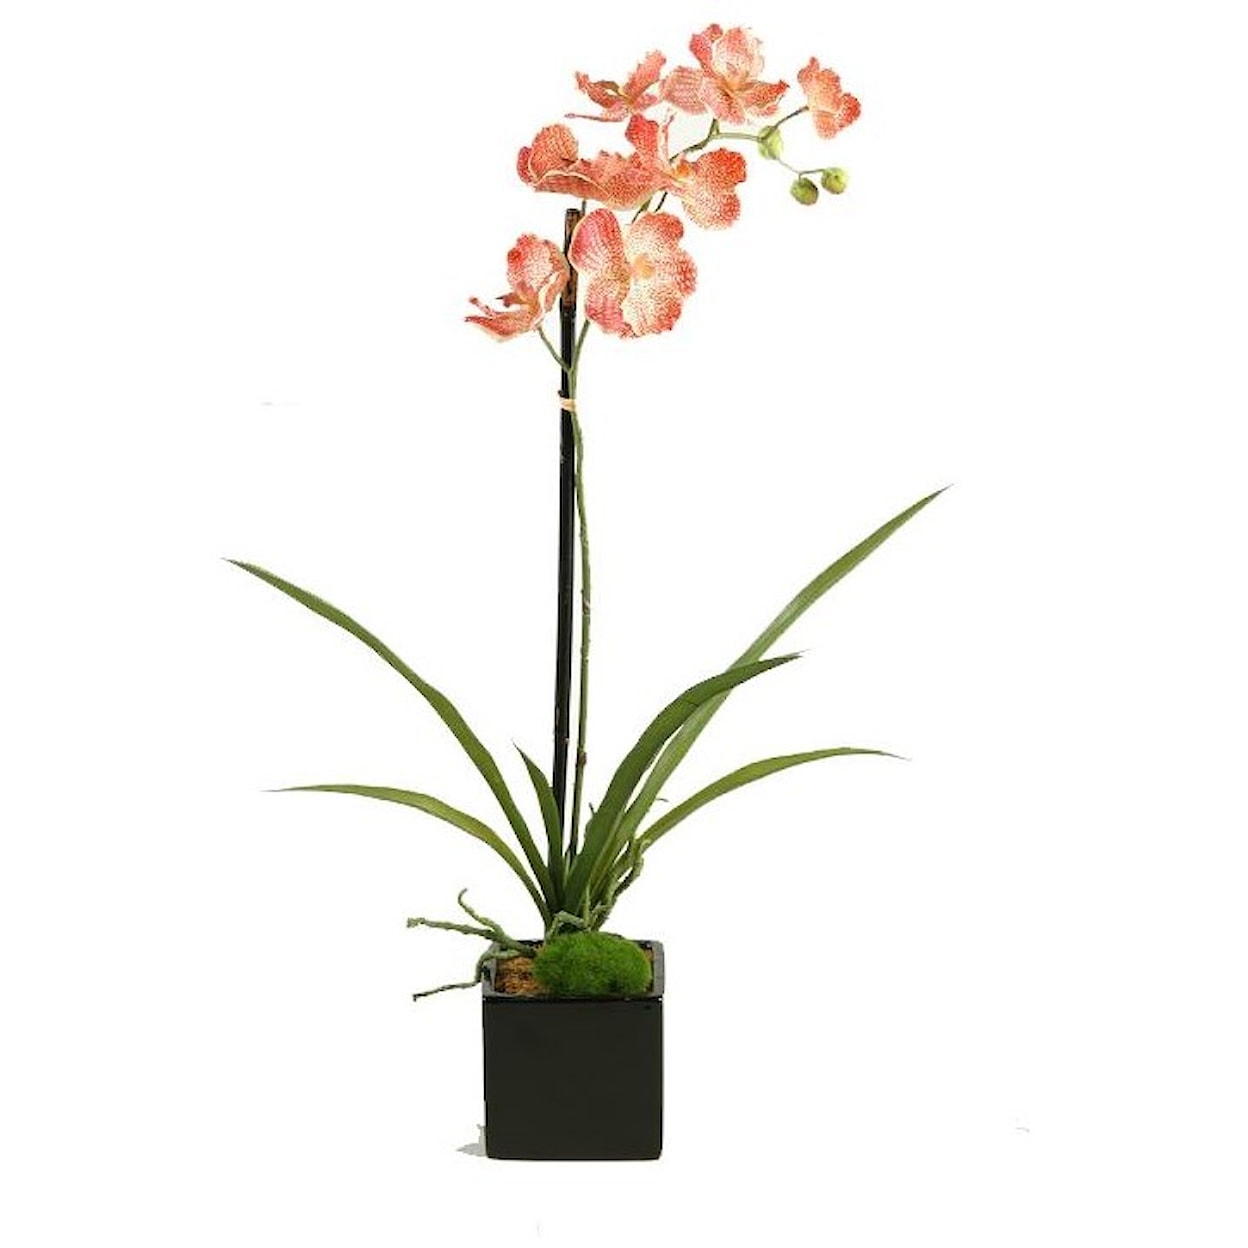 D&W Silks Florals and Botanicals Cream/Red Vanda Orchid